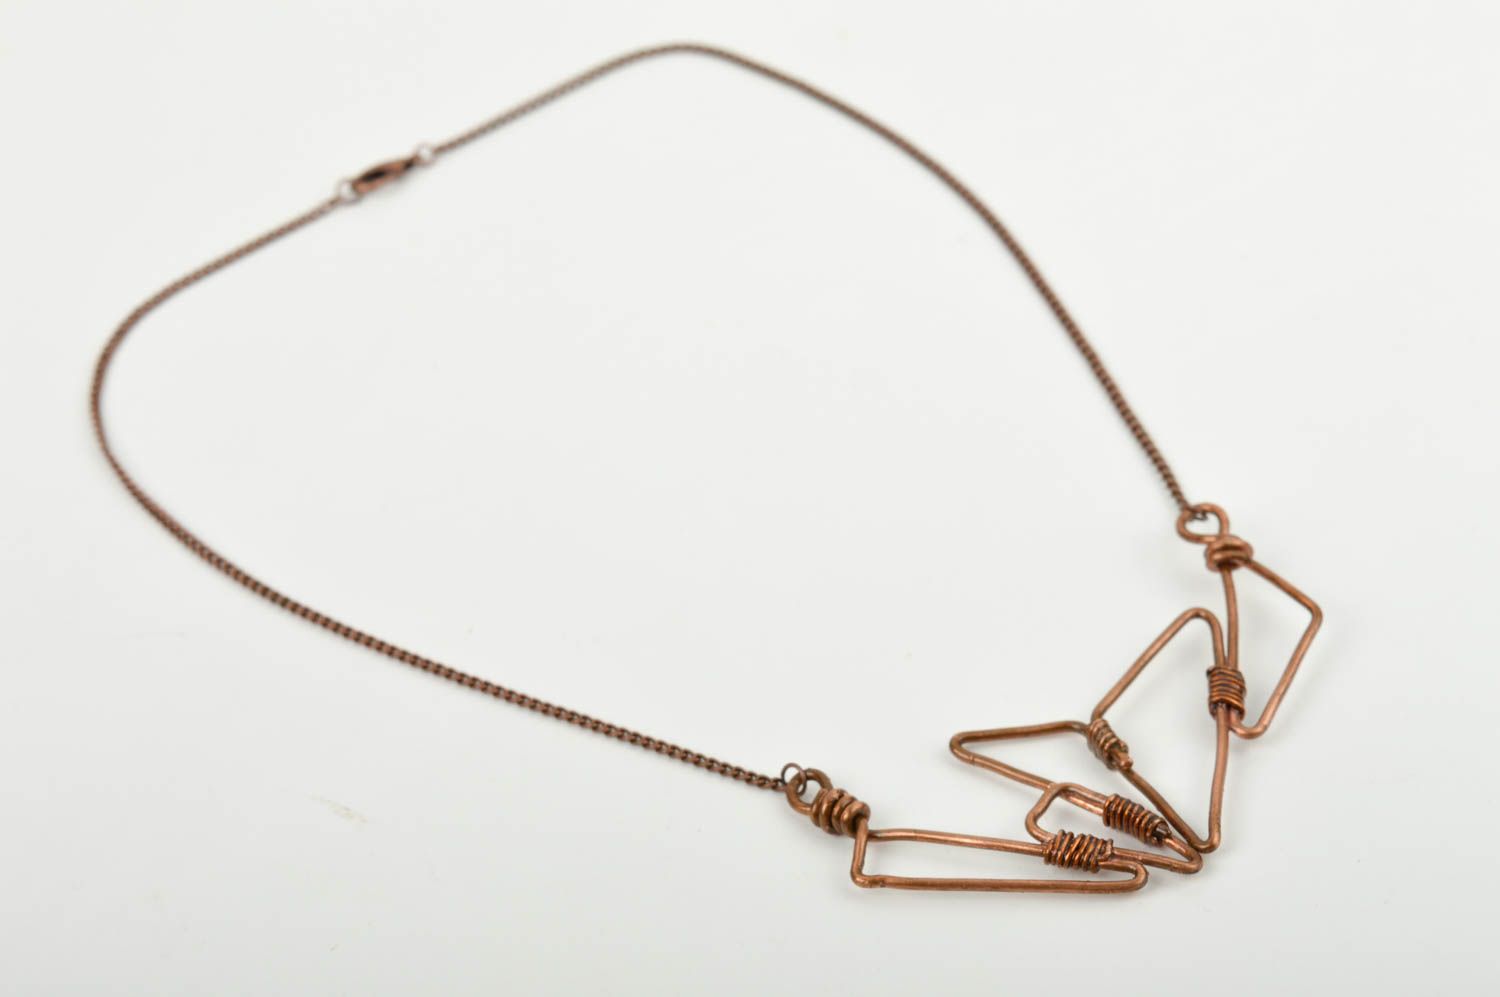 Unusual handmade metal pendant fashion accessories metal craft small gifts photo 5